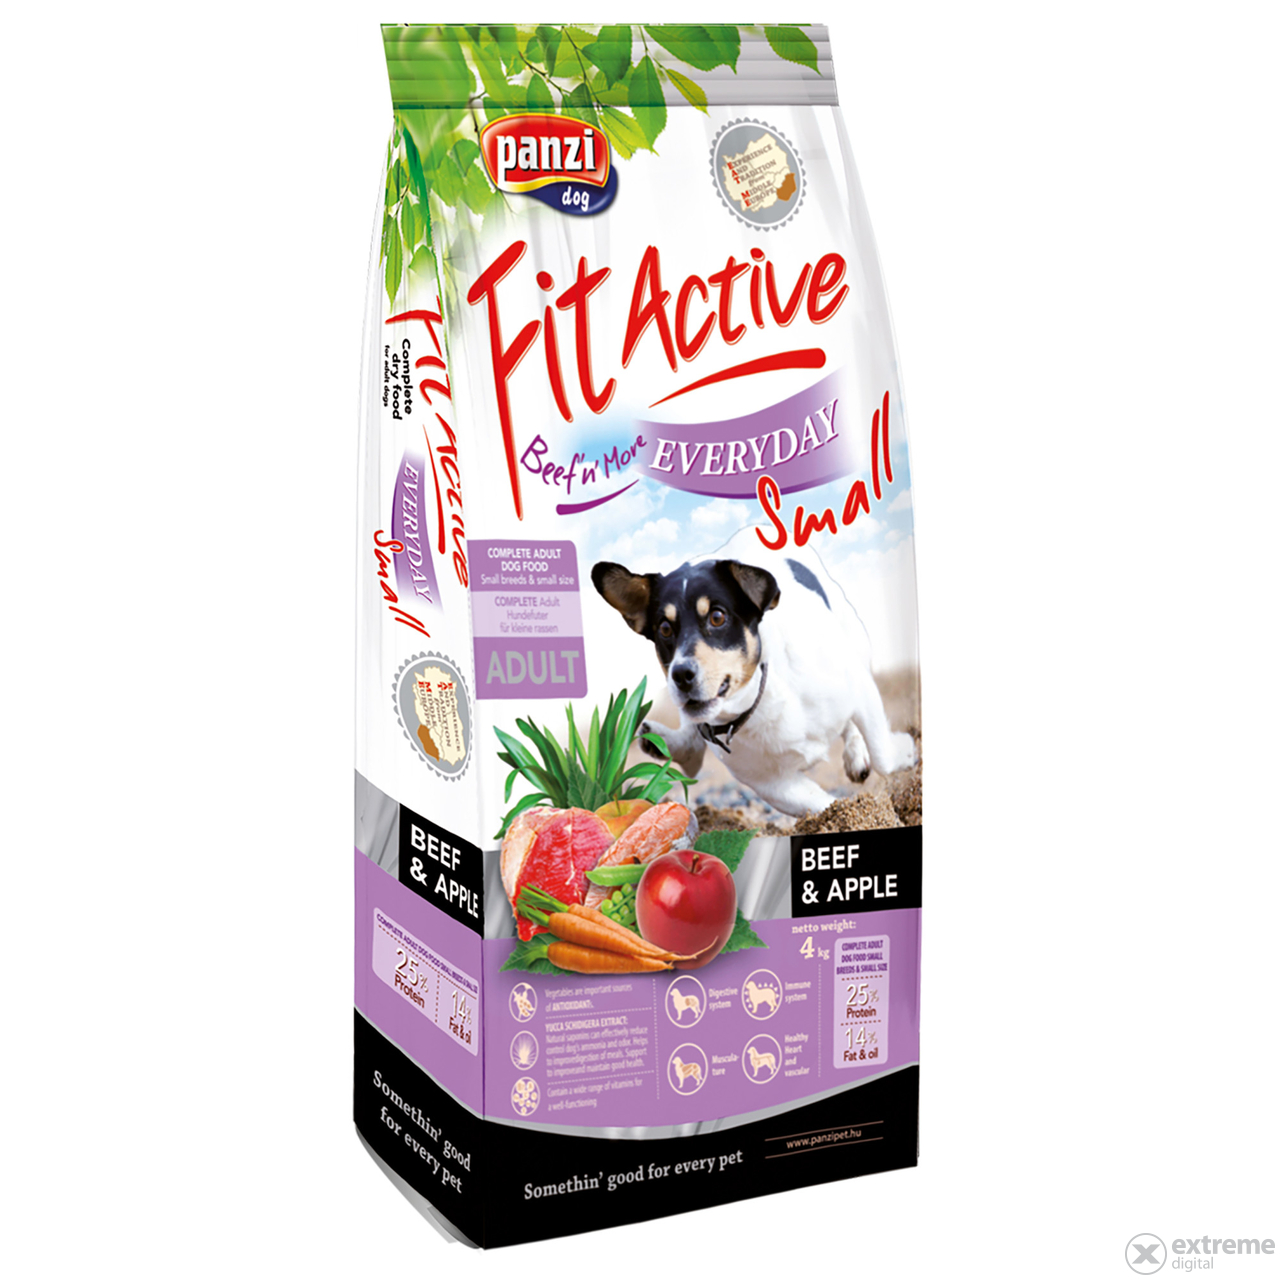 FitActive Premium Everyday Small suha hrana za pse, govedina i jabuka, 4 kg